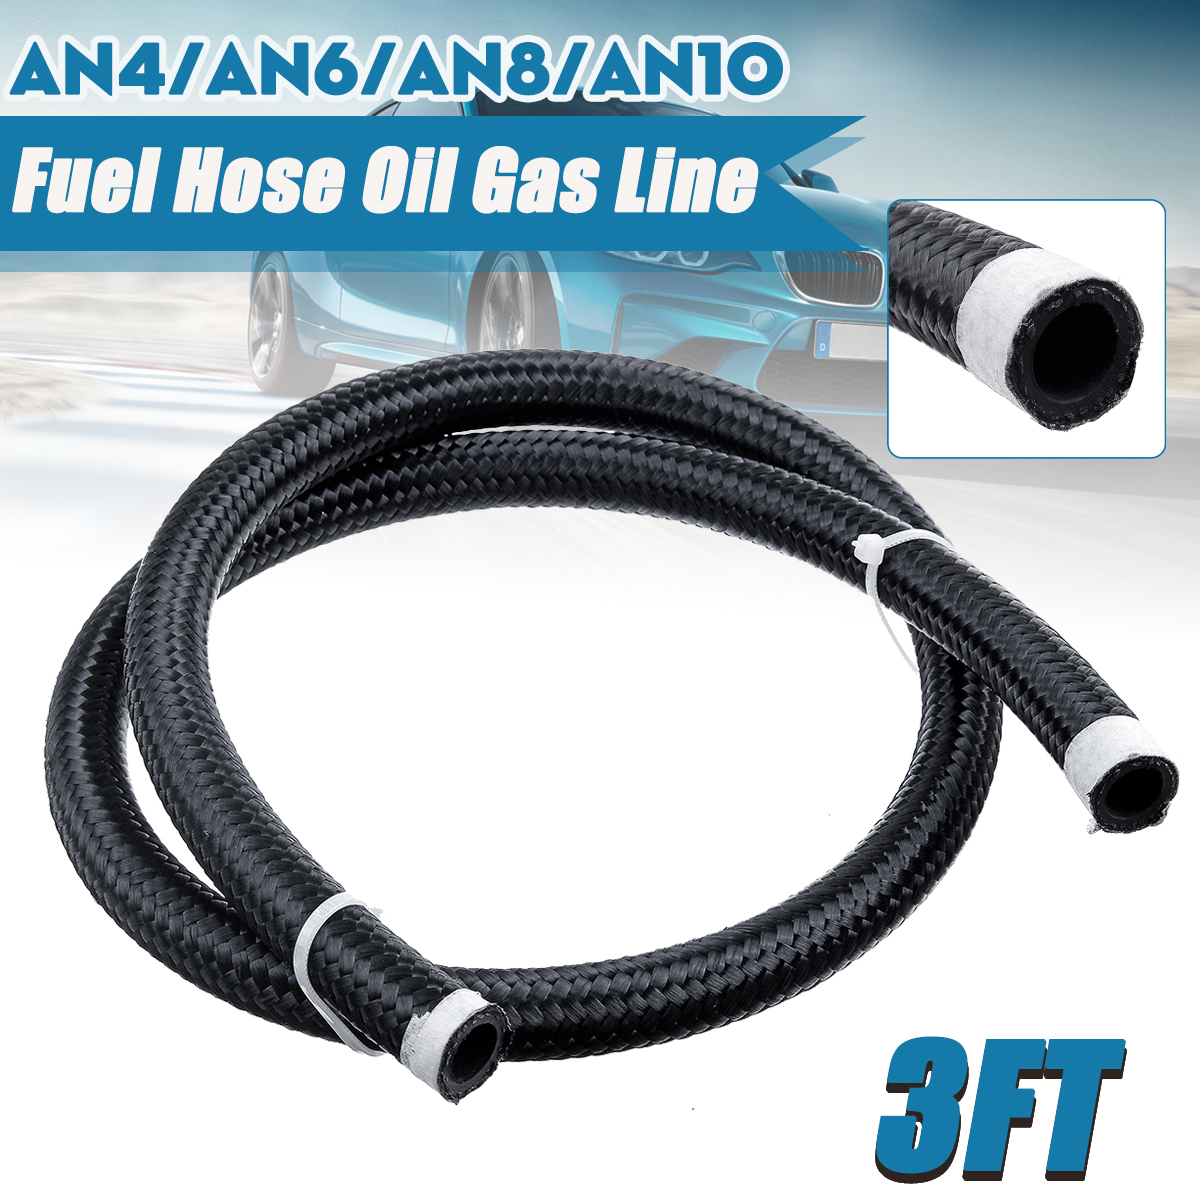 3FT-AN4AN6AN8AN10-Car-Fuel-Hose-Oil-Gas-Line-Nylon-Stainless-Steel-Braided-Black-1682427-1